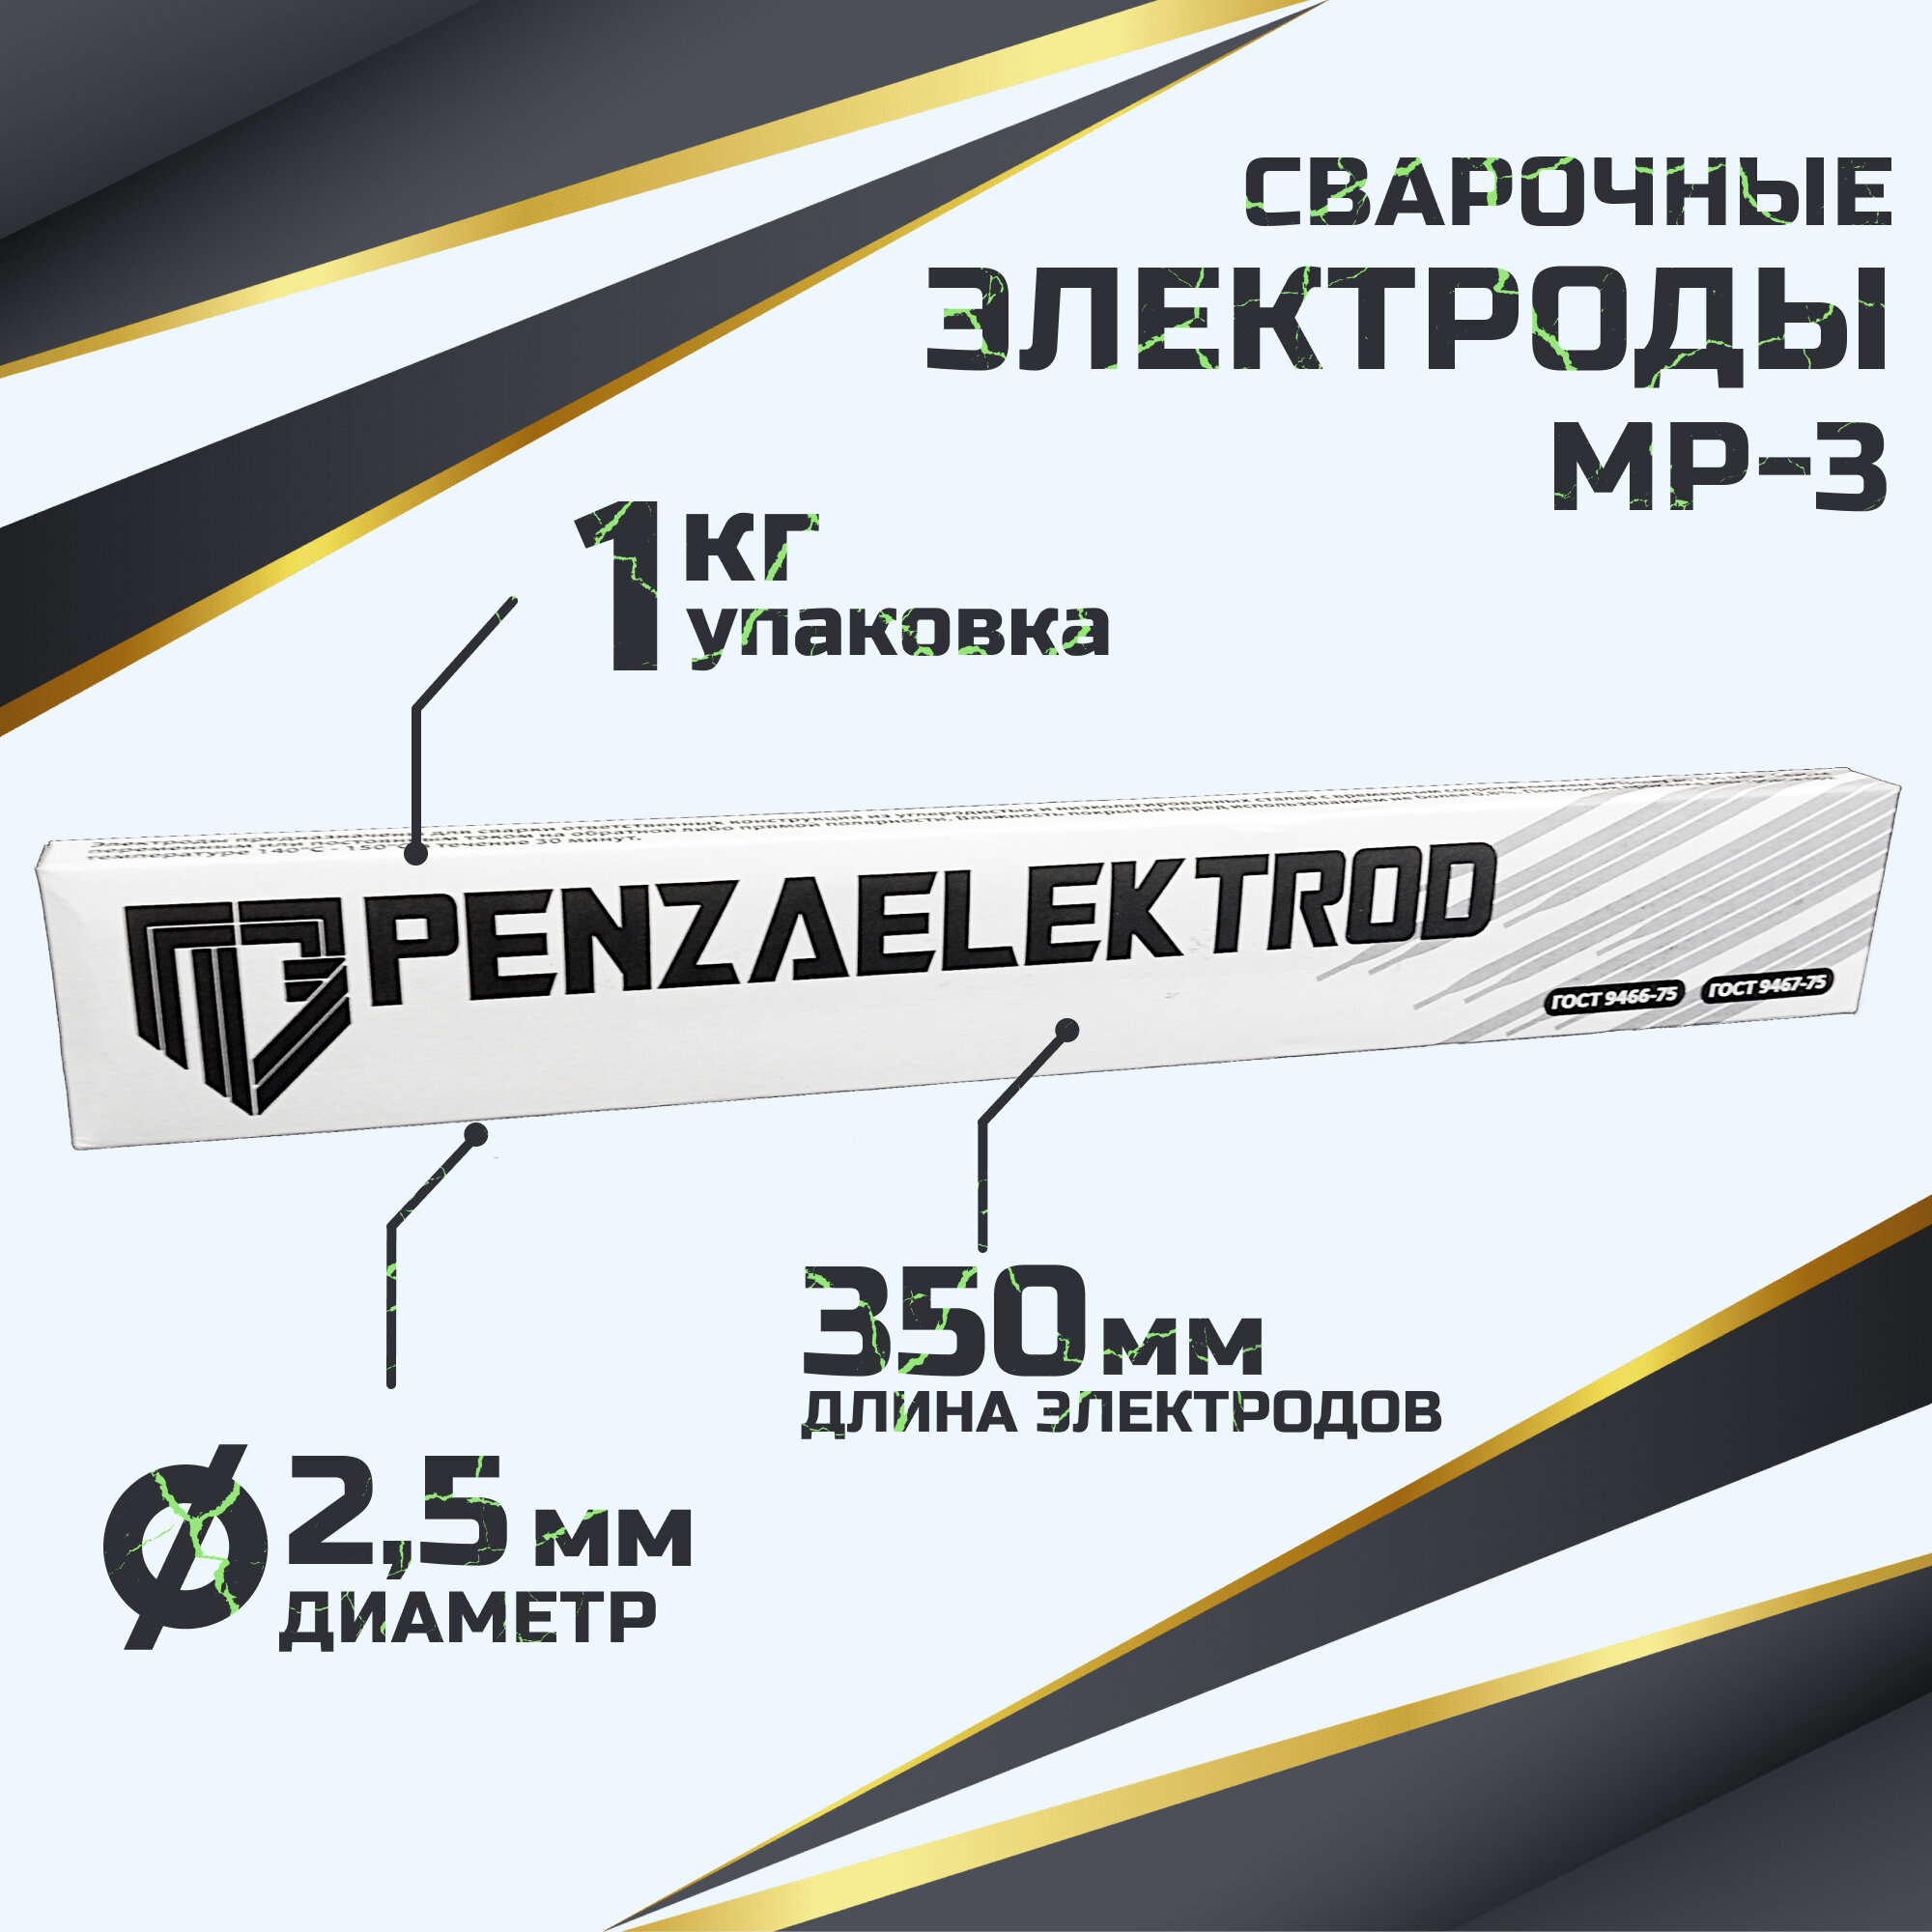 Сварочные электроды МР-3 (d-25 мм) по 1 кг г. Пенза